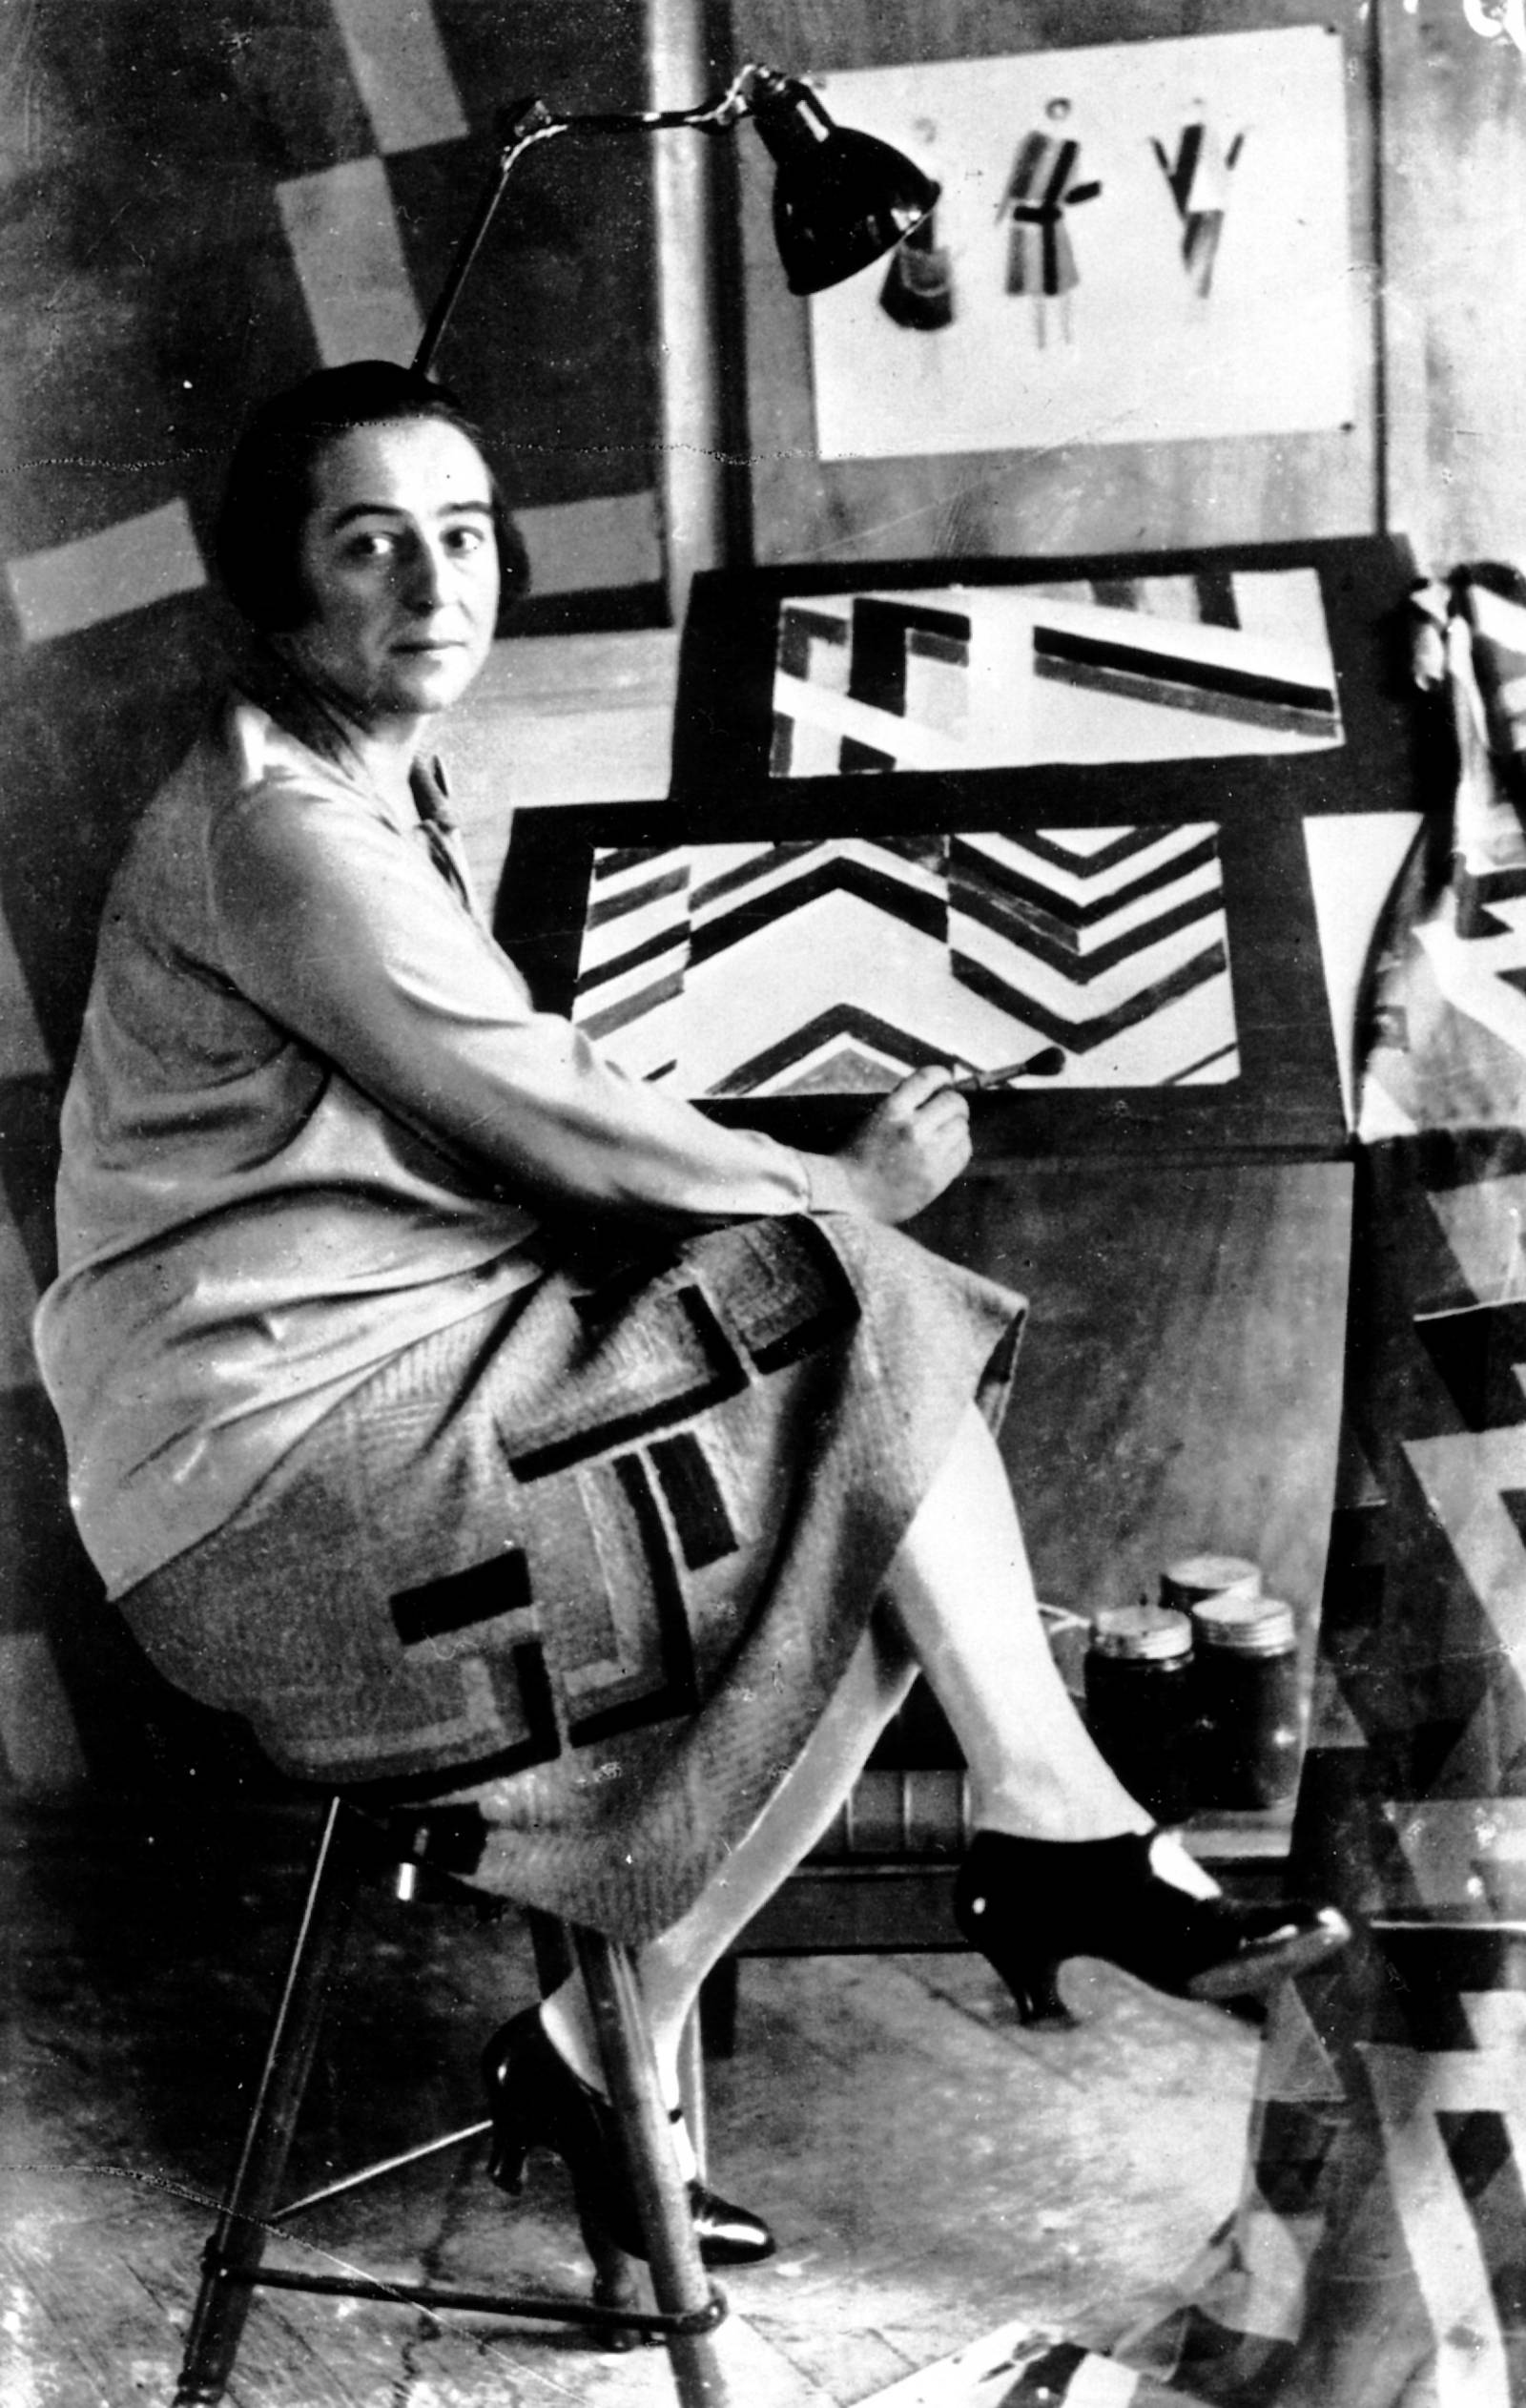 Sonia Delaunay in her Altelier Simultané, Paris, 1924